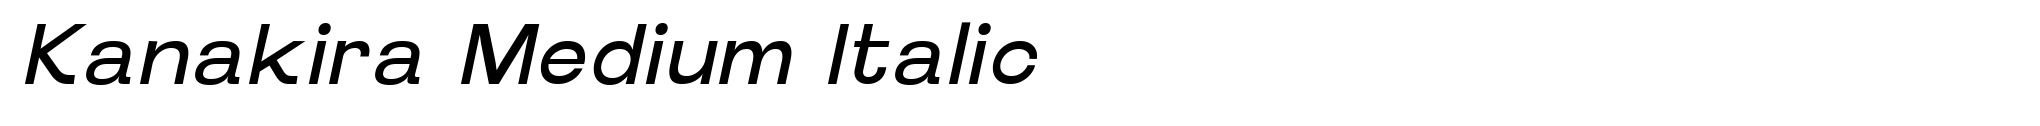 Kanakira Medium Italic image